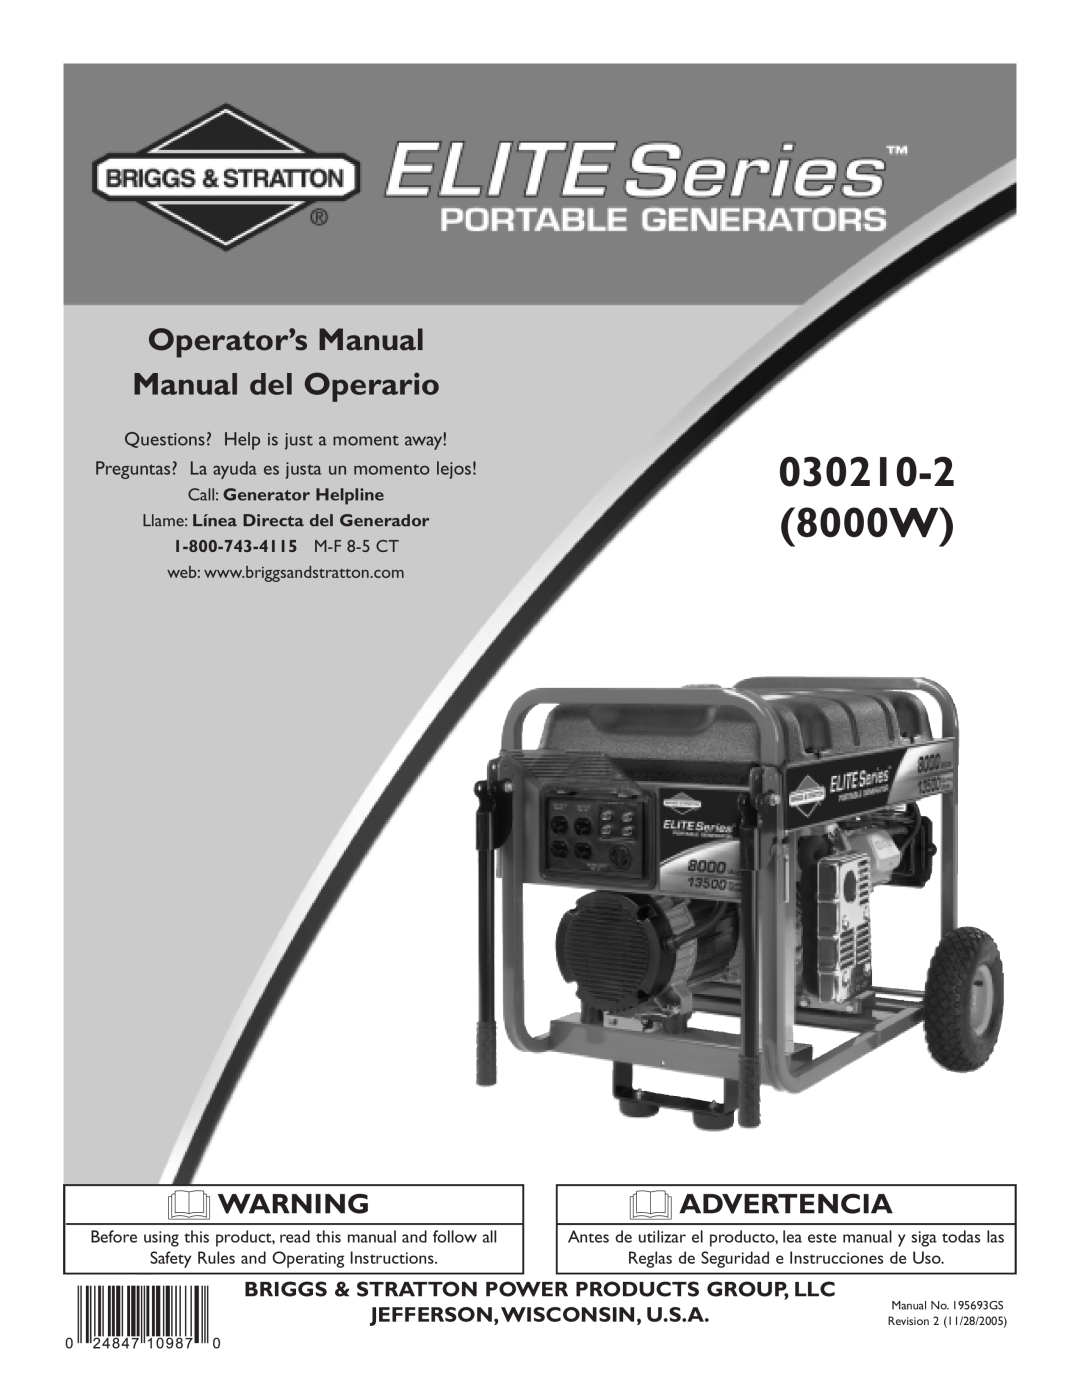 Briggs & Stratton 030210-2 manual Operator’s Manual Manual del Operario, Briggs & Stratton Power Products Group, Llc 